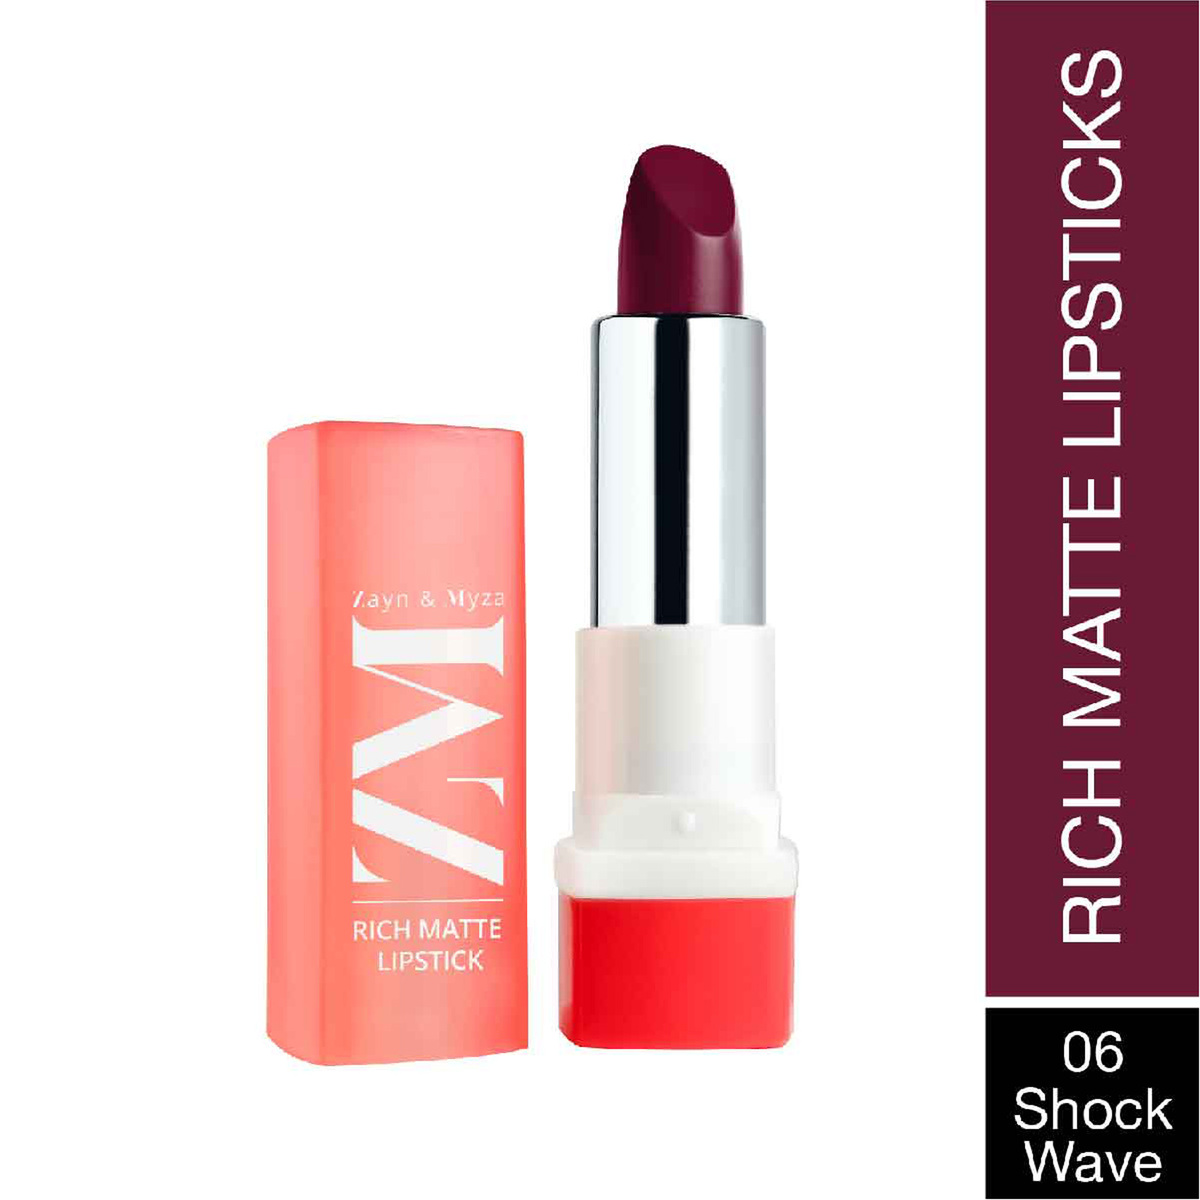 Zayn & Myza Shock Wave Rich Matte Lipstick, 4.2 g